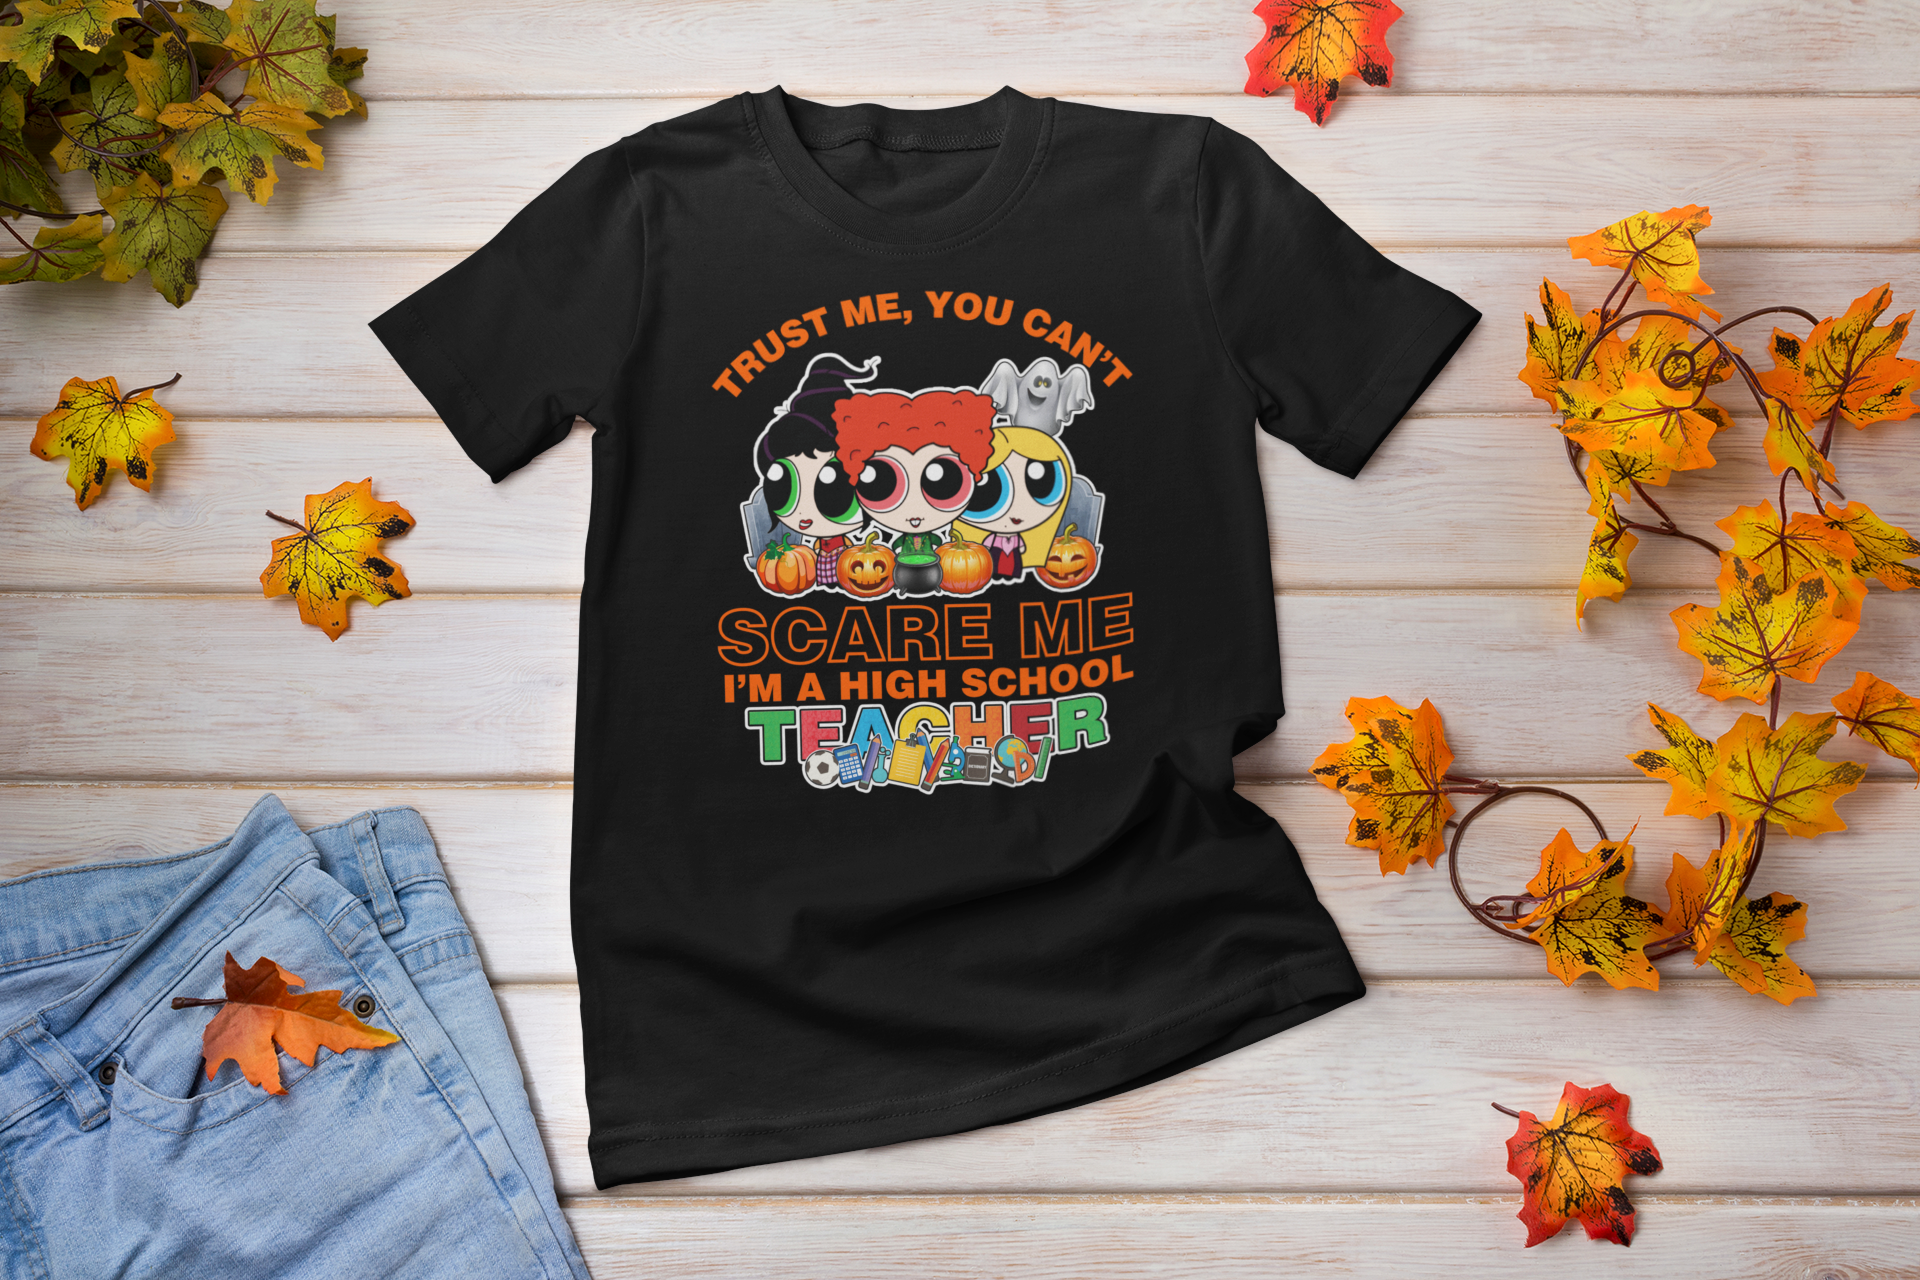 Halloween T-shirt Roblox  Cute tshirt designs, Roblox t shirts, Halloween  tshirts